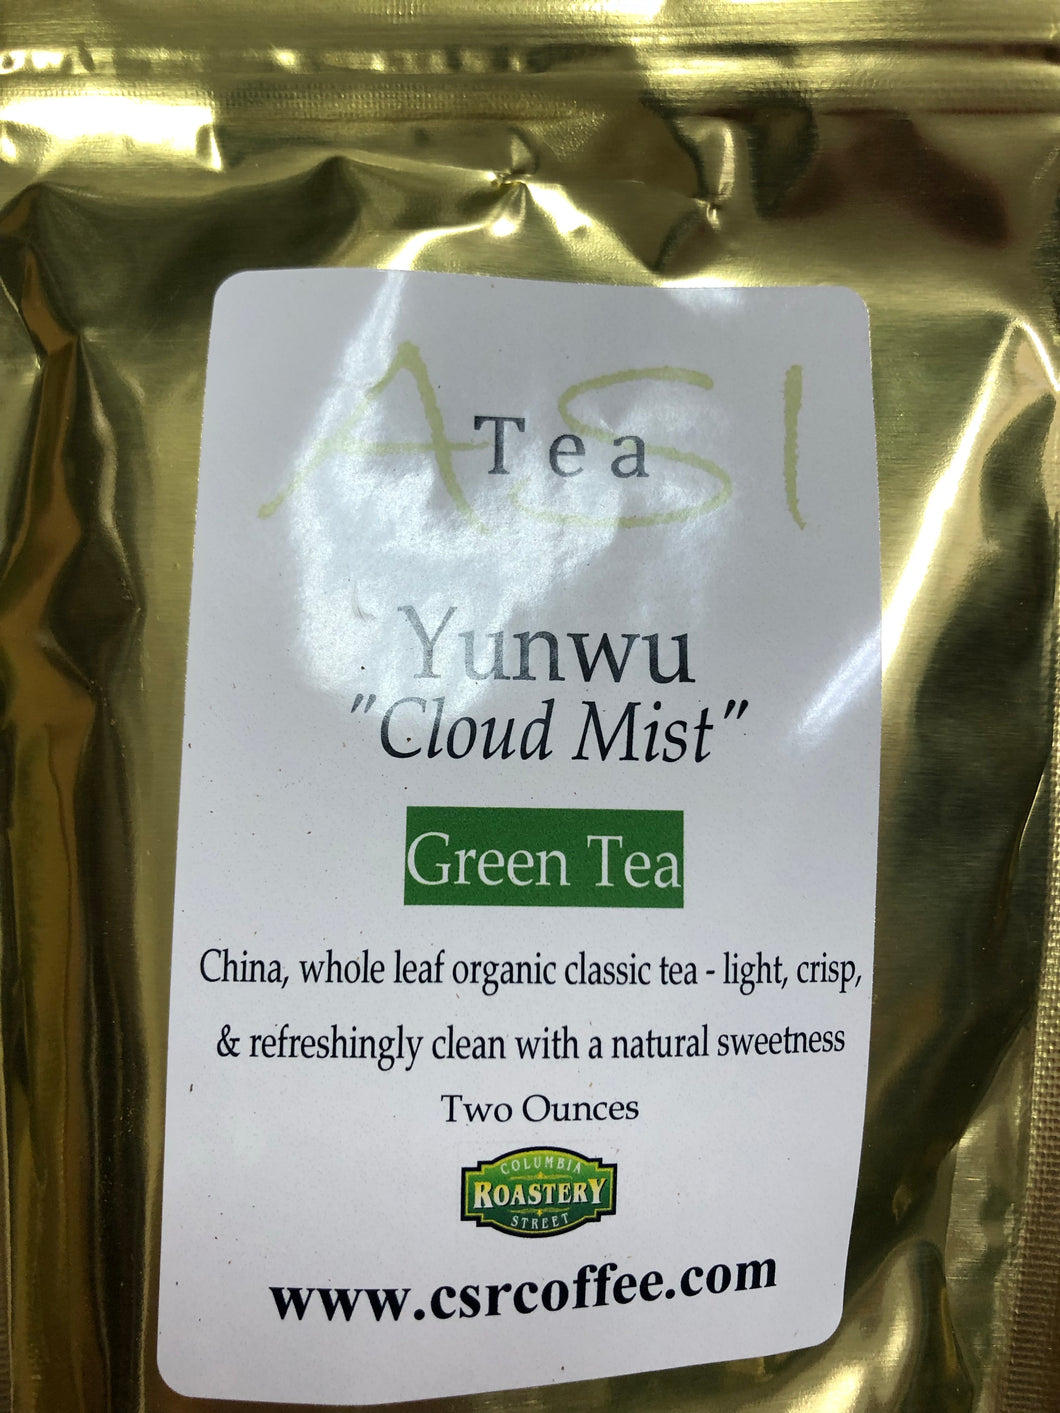 Hot Tea - Green - Yunwu 'Cloud Mist'